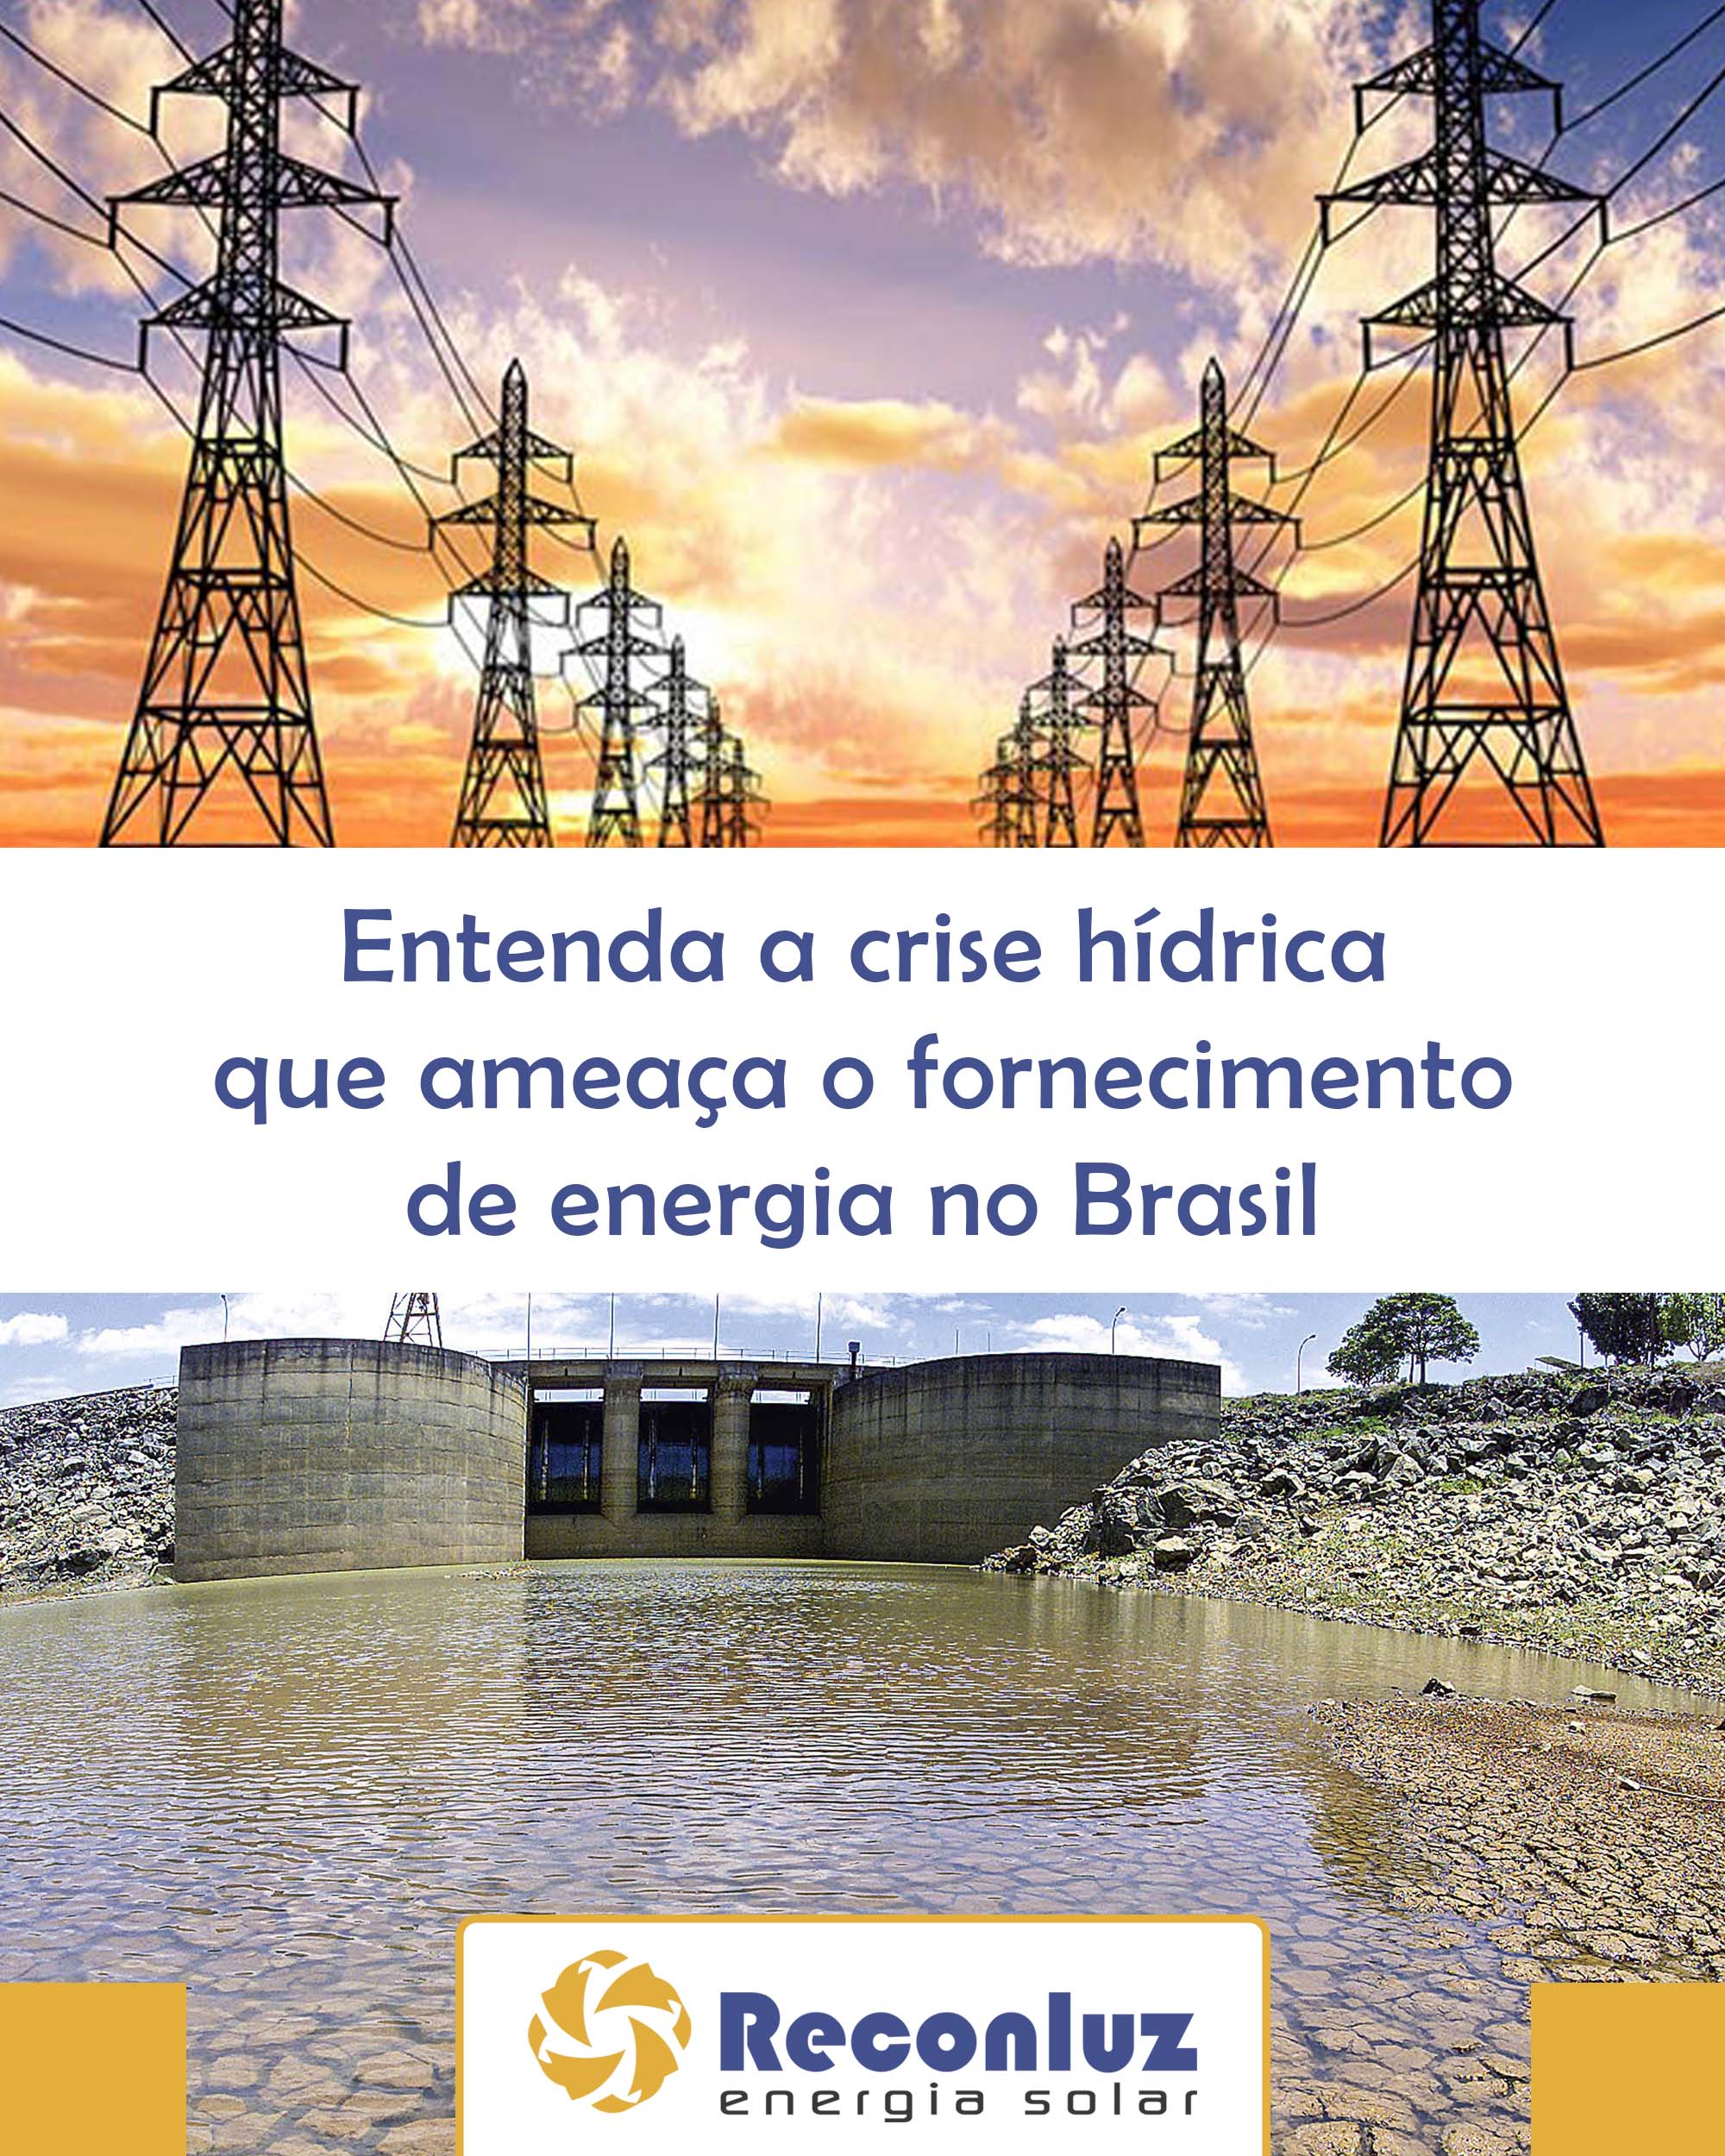 Crise Hídrica no Brasil - Reconluz Energia Solar na Bahia